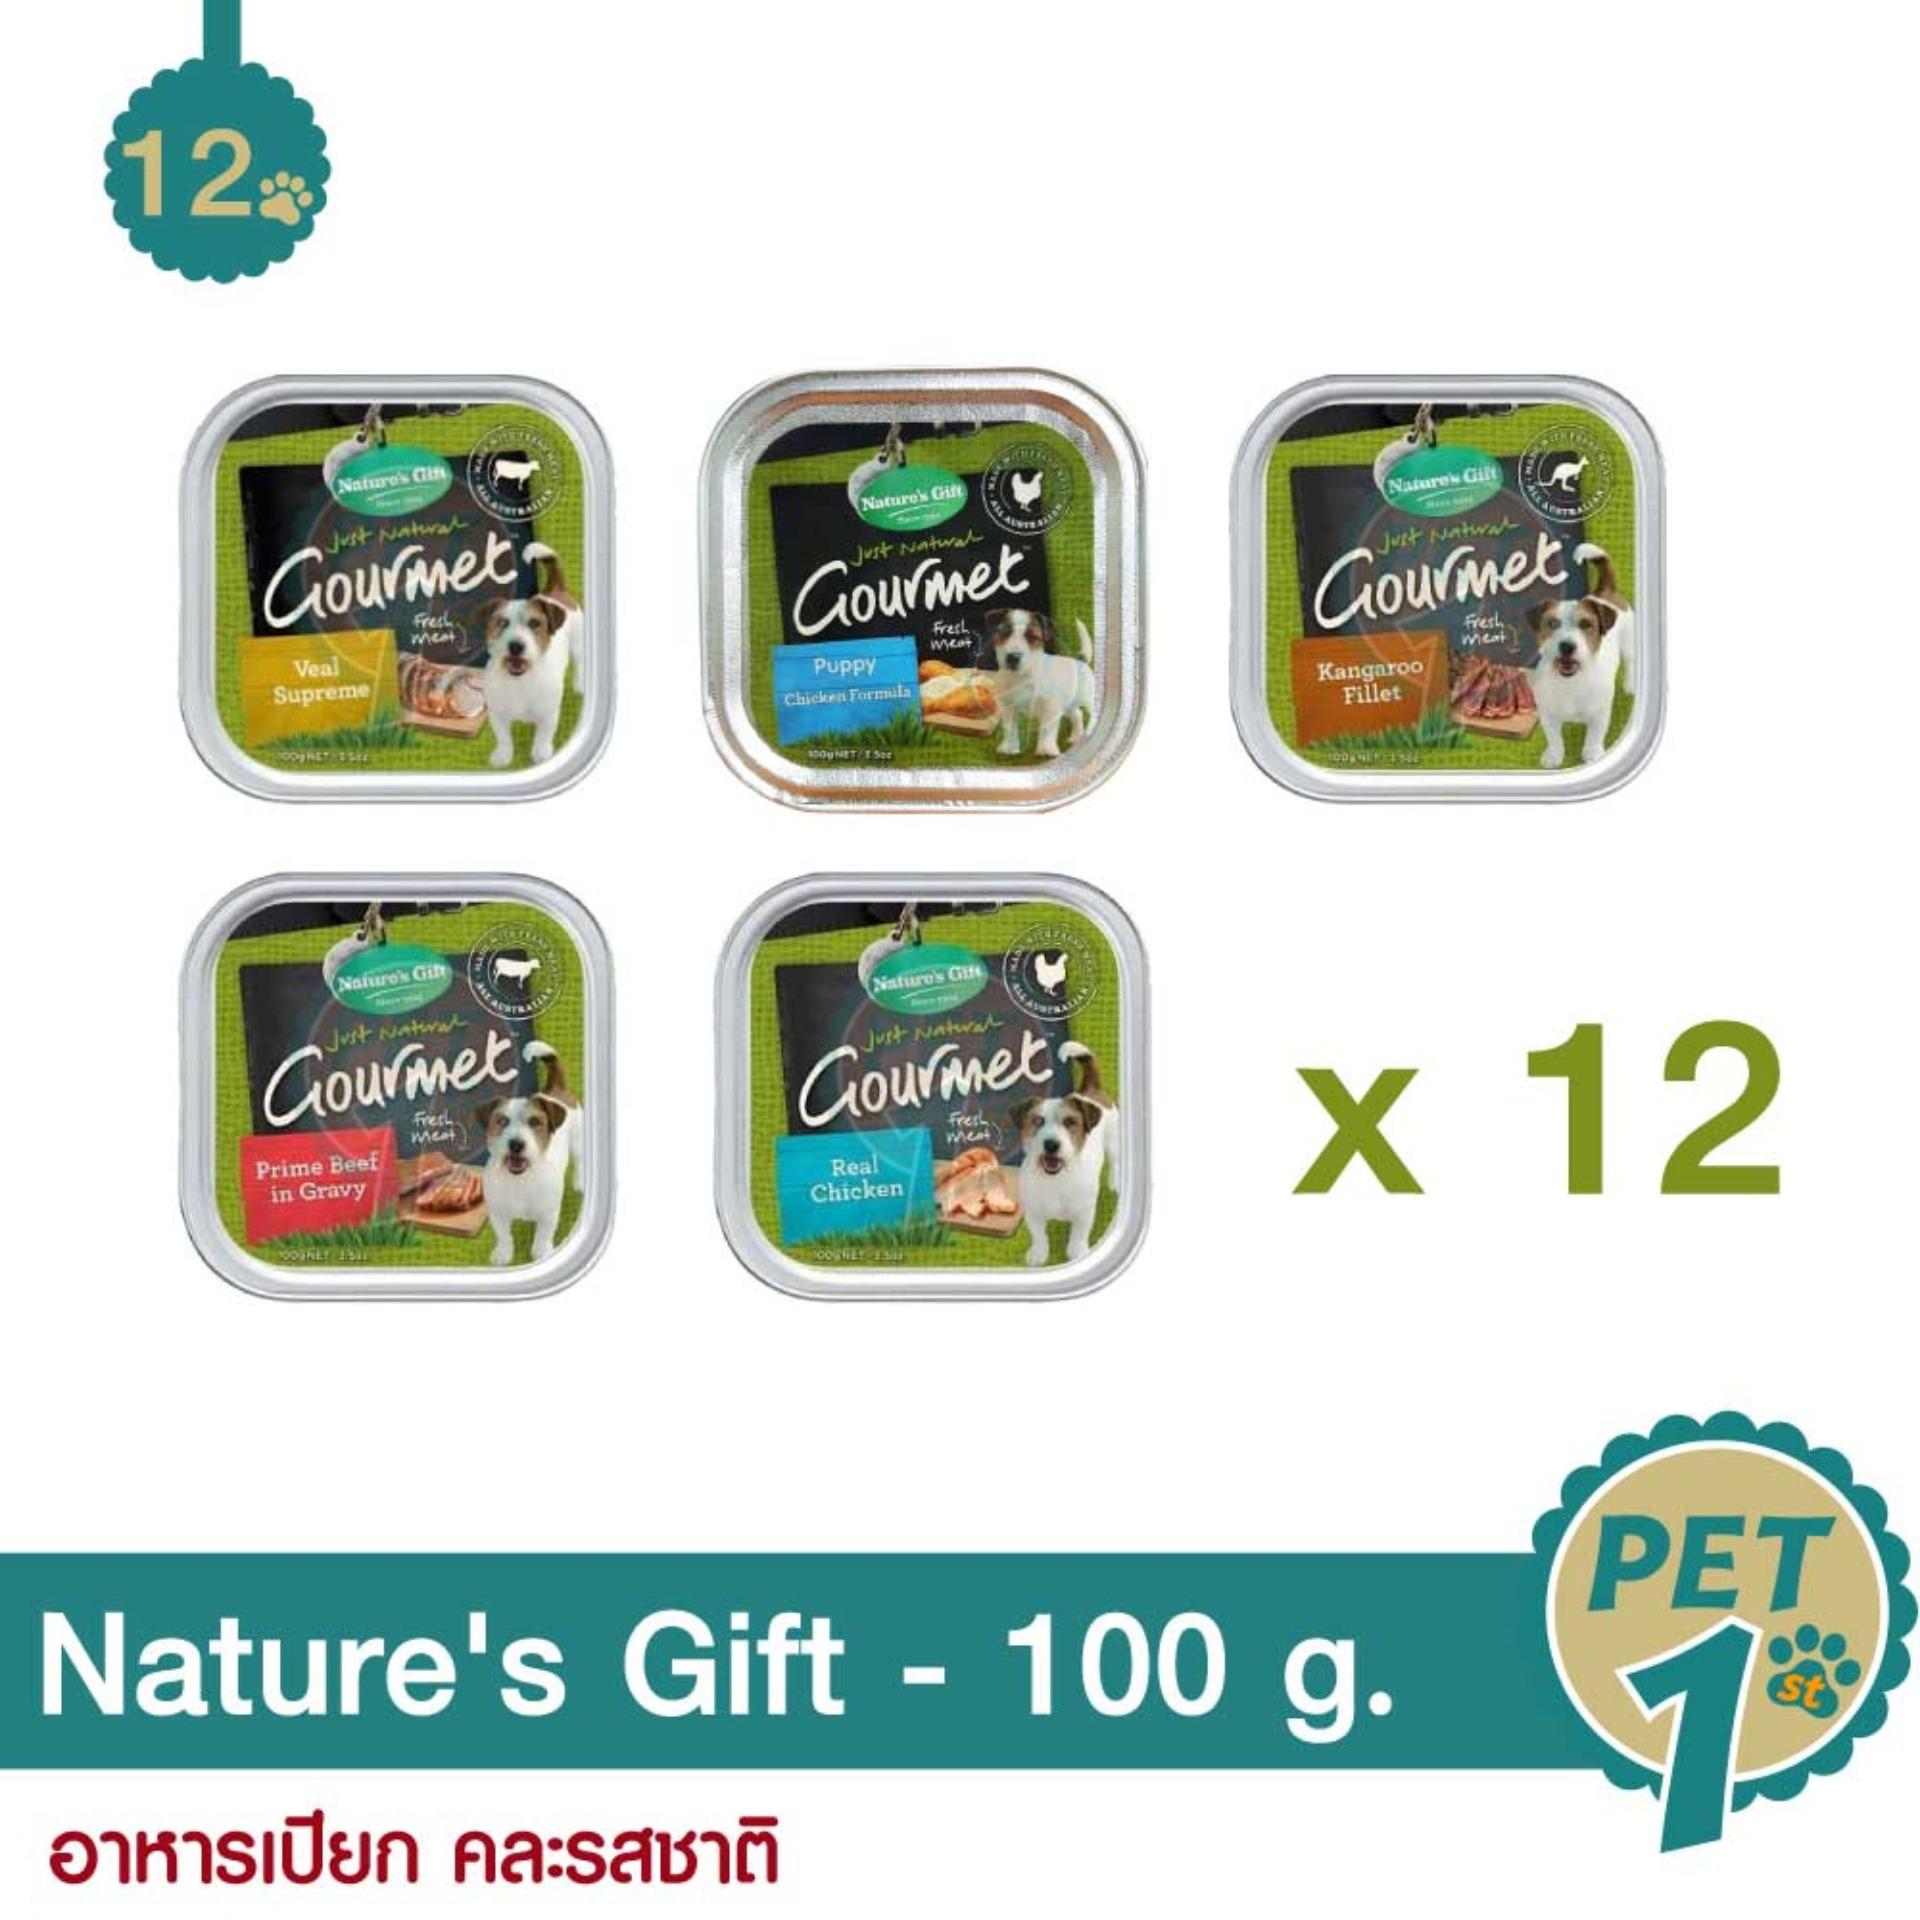 Nature's Gift Mixed 100 g. อาหารสุนัข อาหารเปียก คละรสชาติ สำหรับสุนัข 4 เดือนขึ้นไป 100 กรัม - 12 ถาด